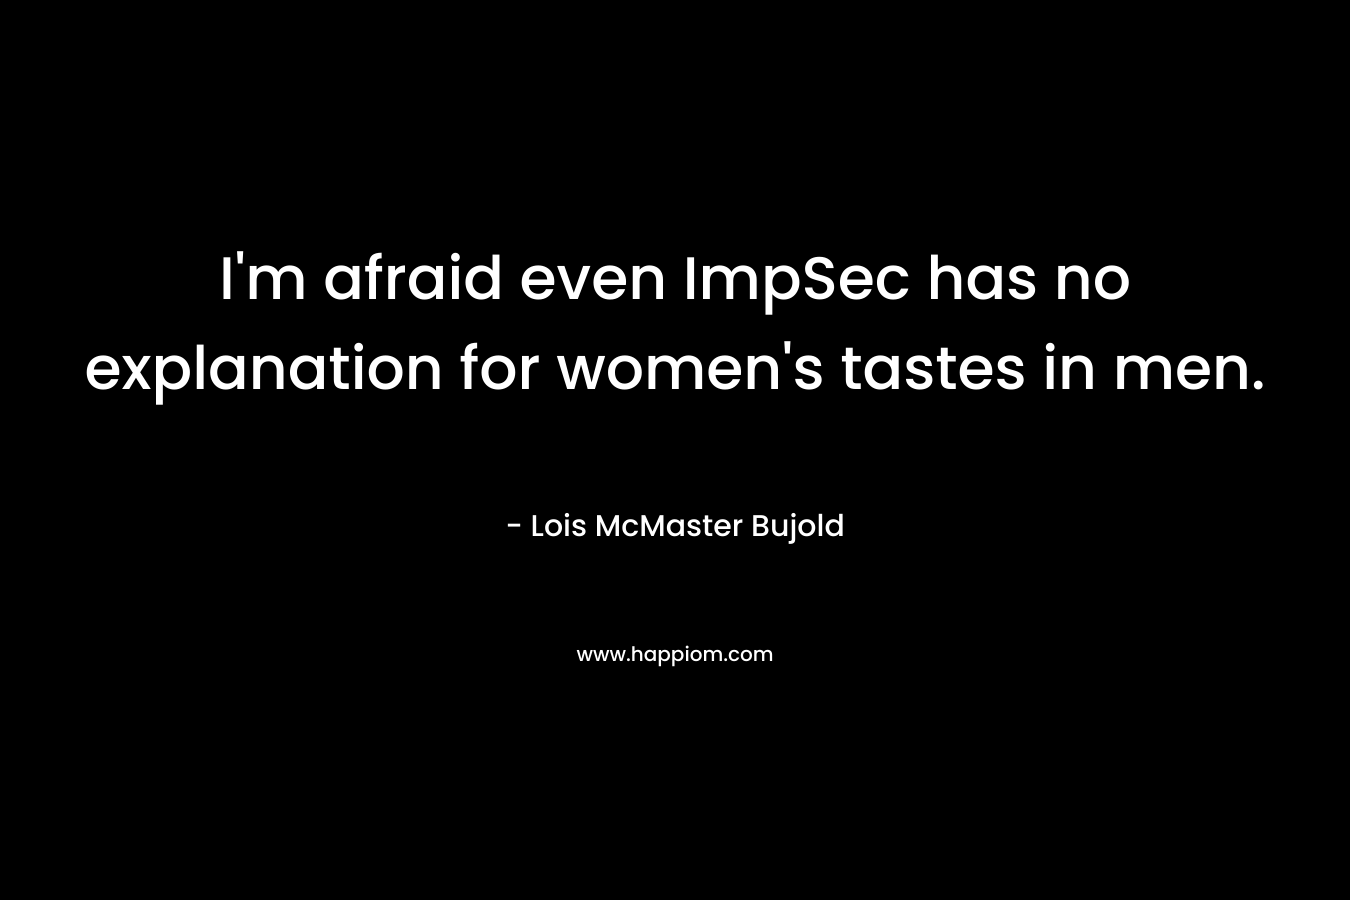 I'm afraid even ImpSec has no explanation for women's tastes in men.